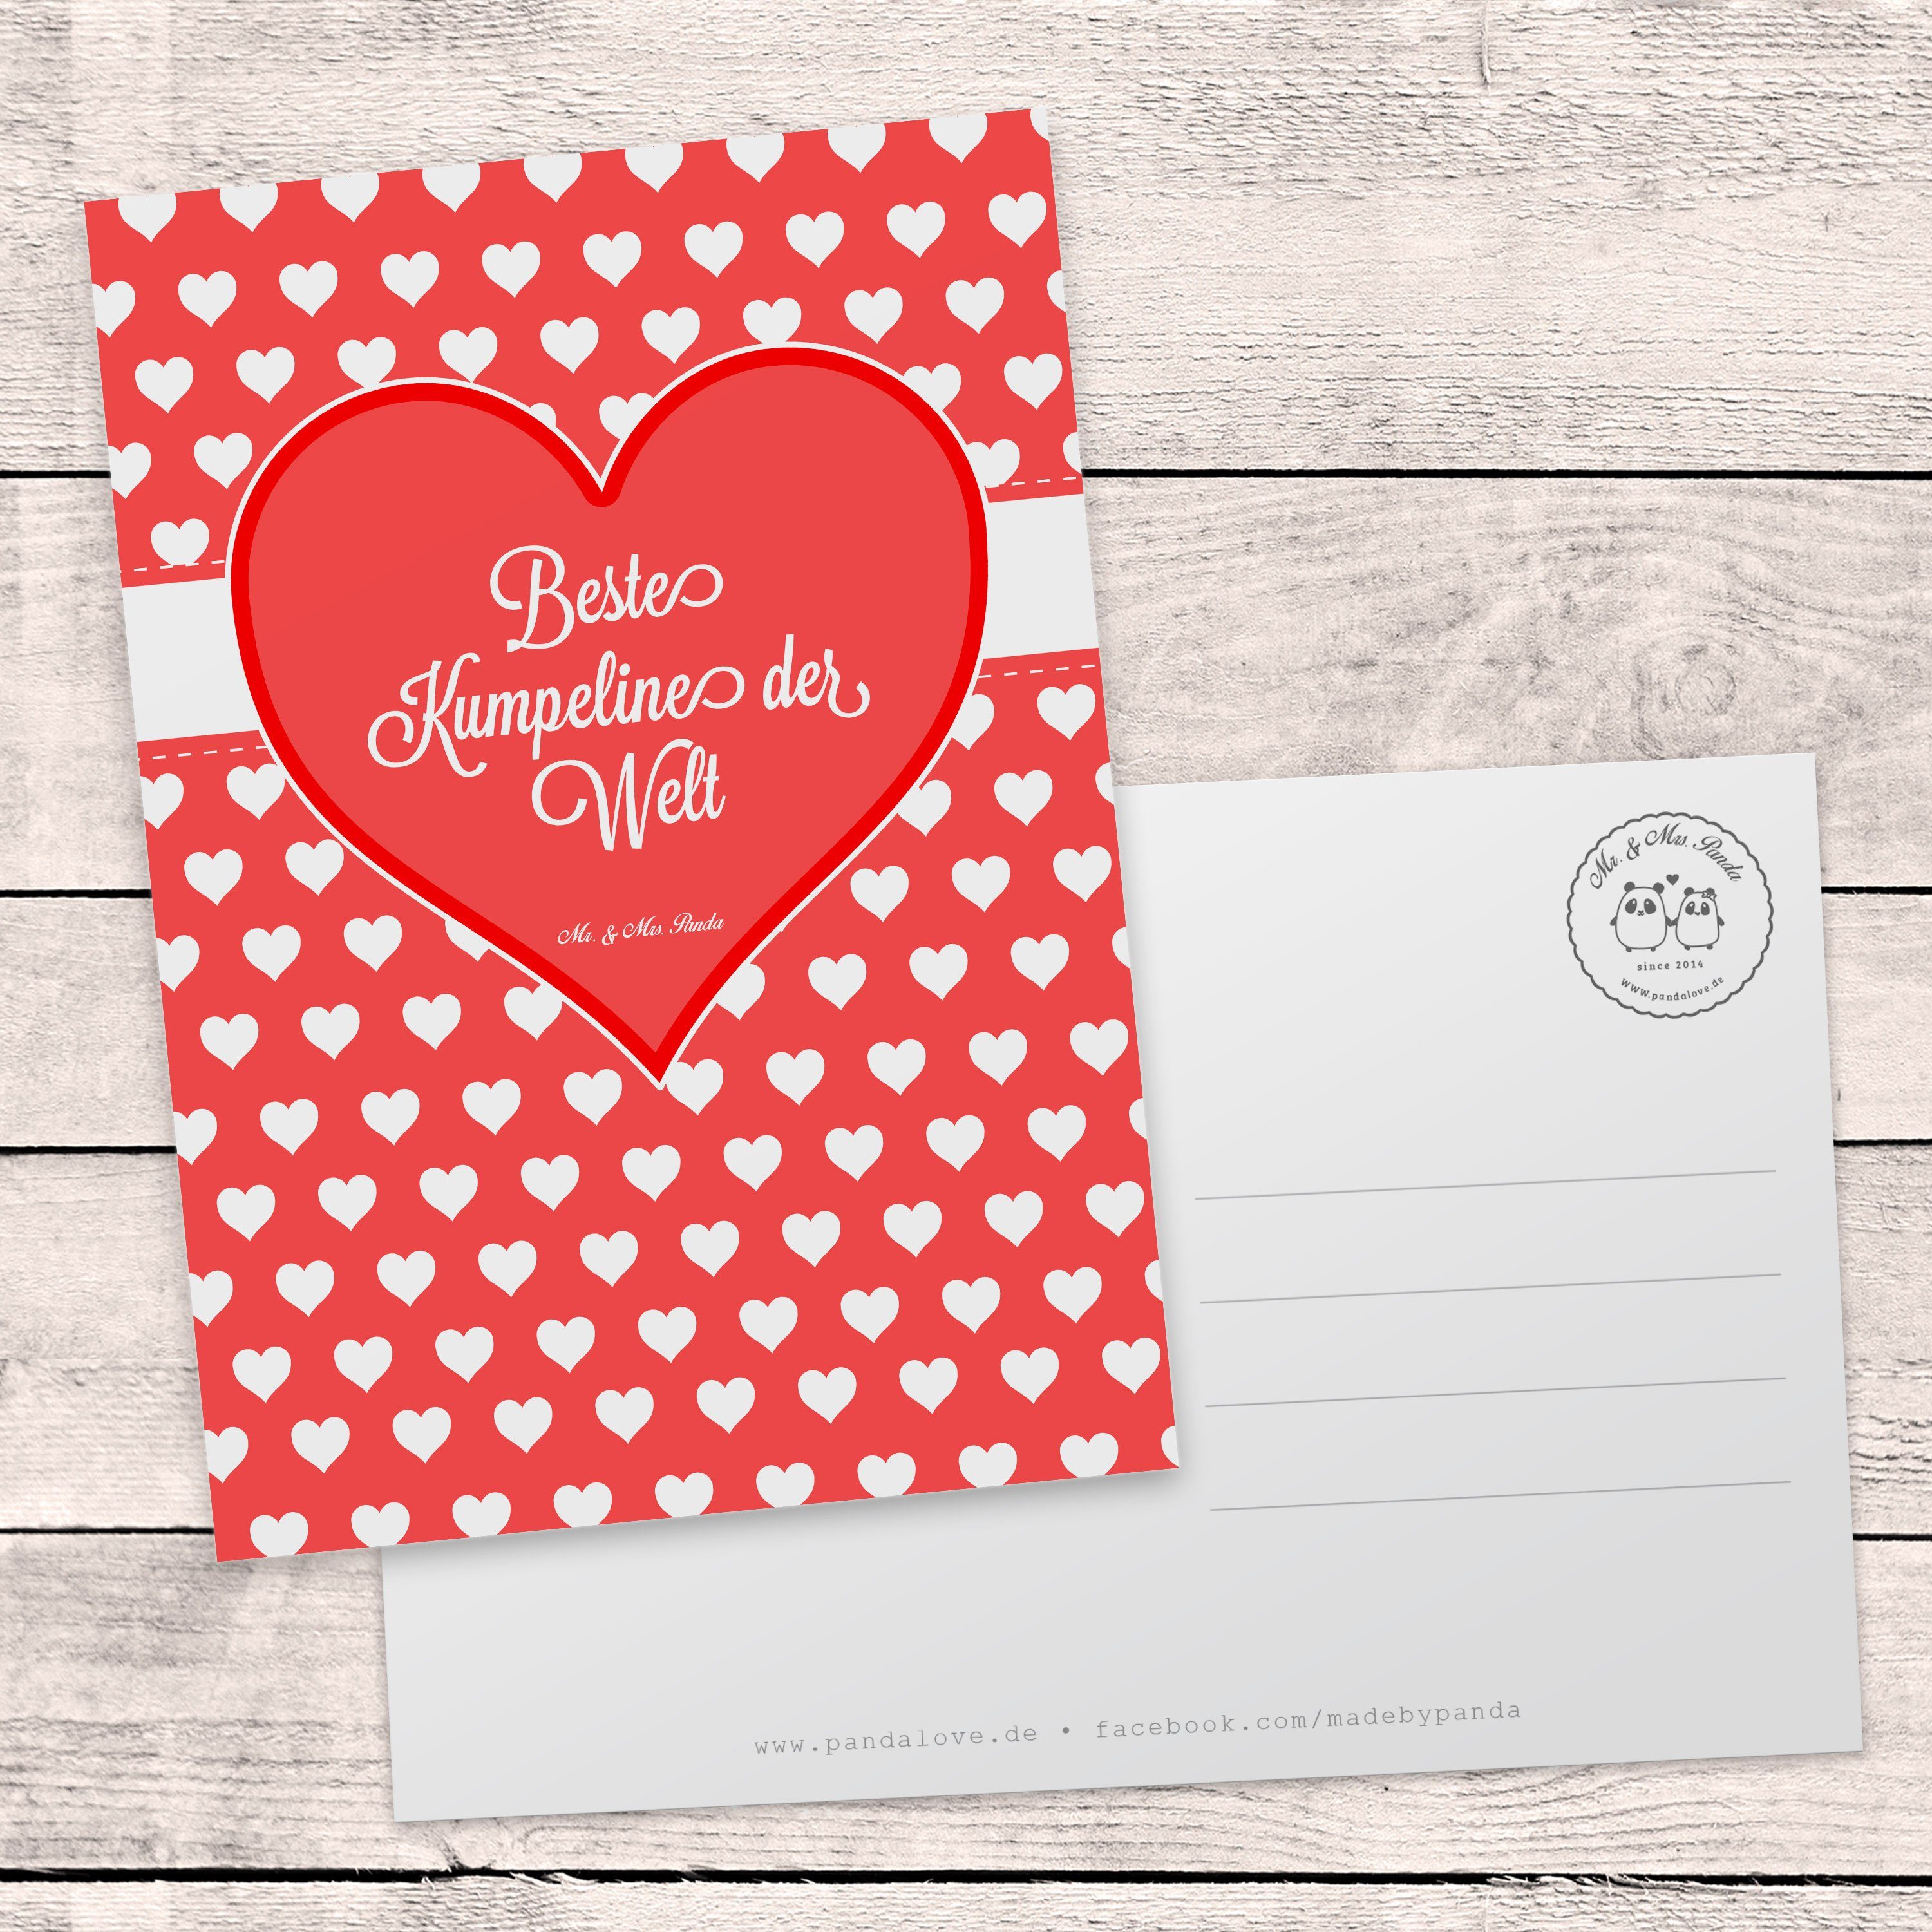 Mr. & Mrs. Panda Postkarte Kumpeline - Geschenk, Einladungskarte, Einladung, Geschenkkarte, Gruß